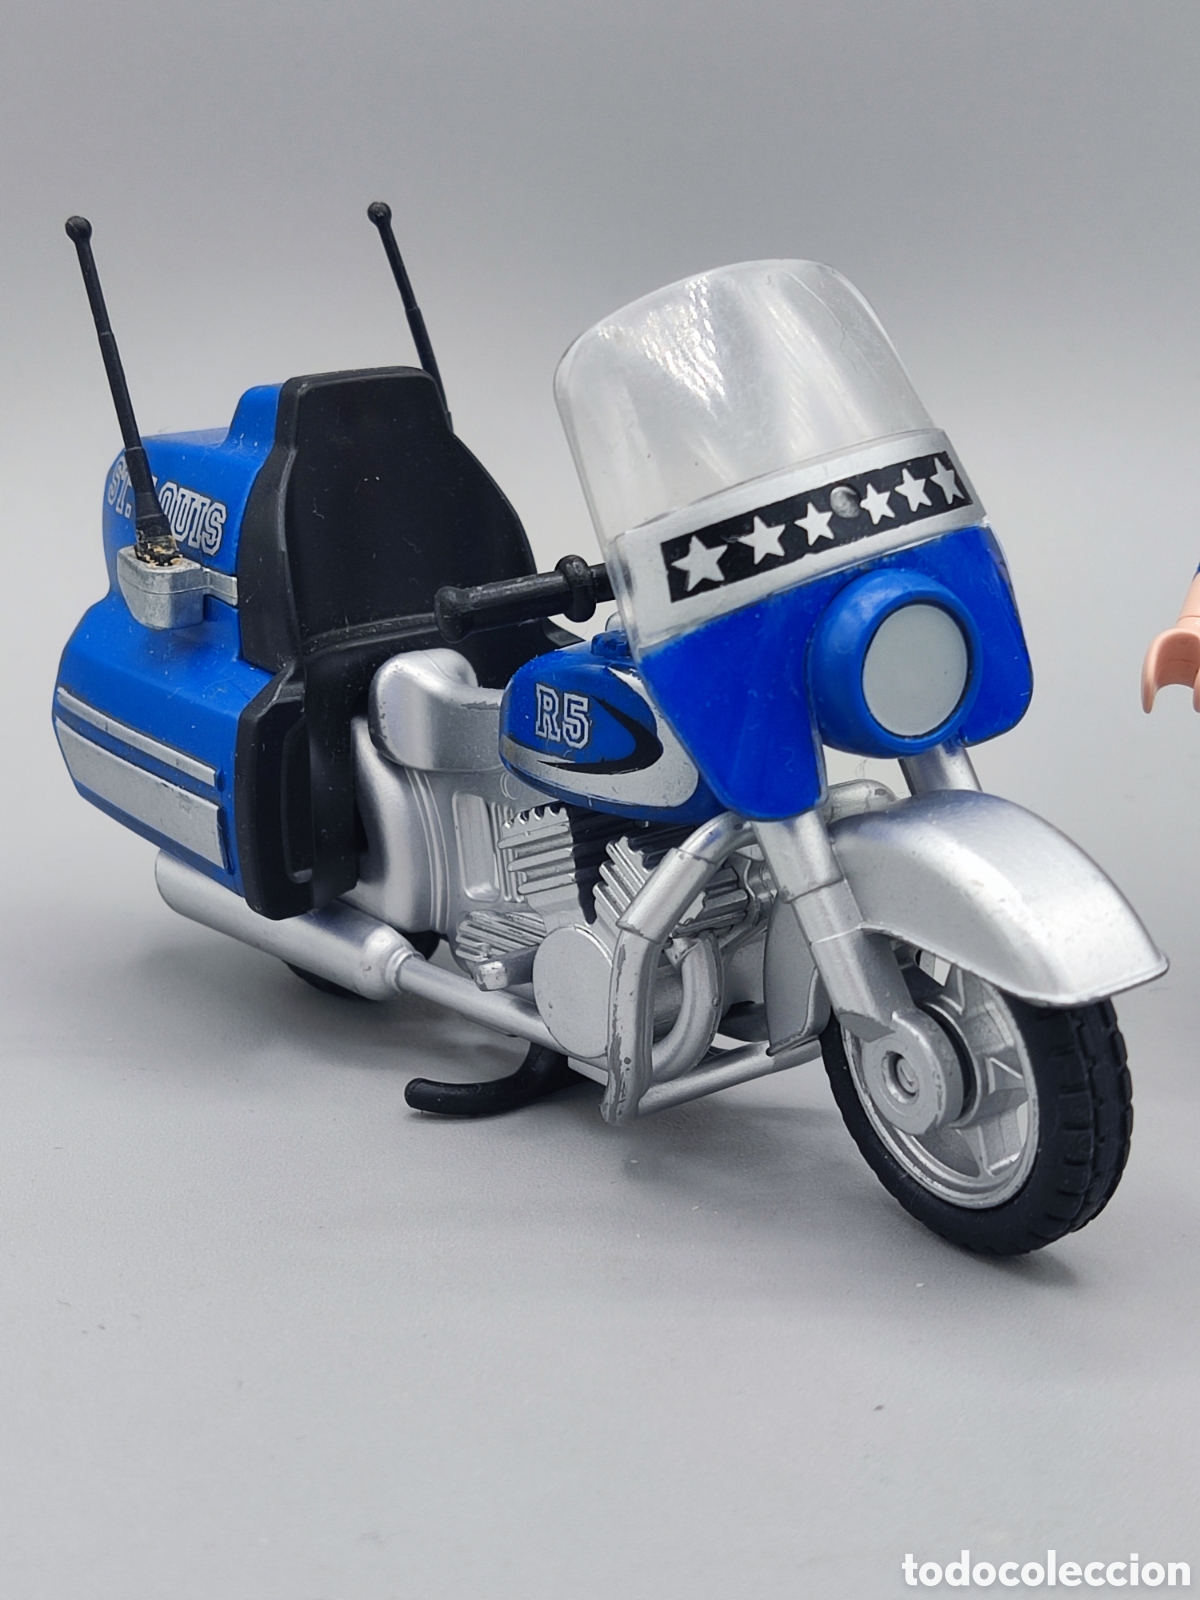 playmobil moto de carretera - Acheter Playmobil sur todocoleccion